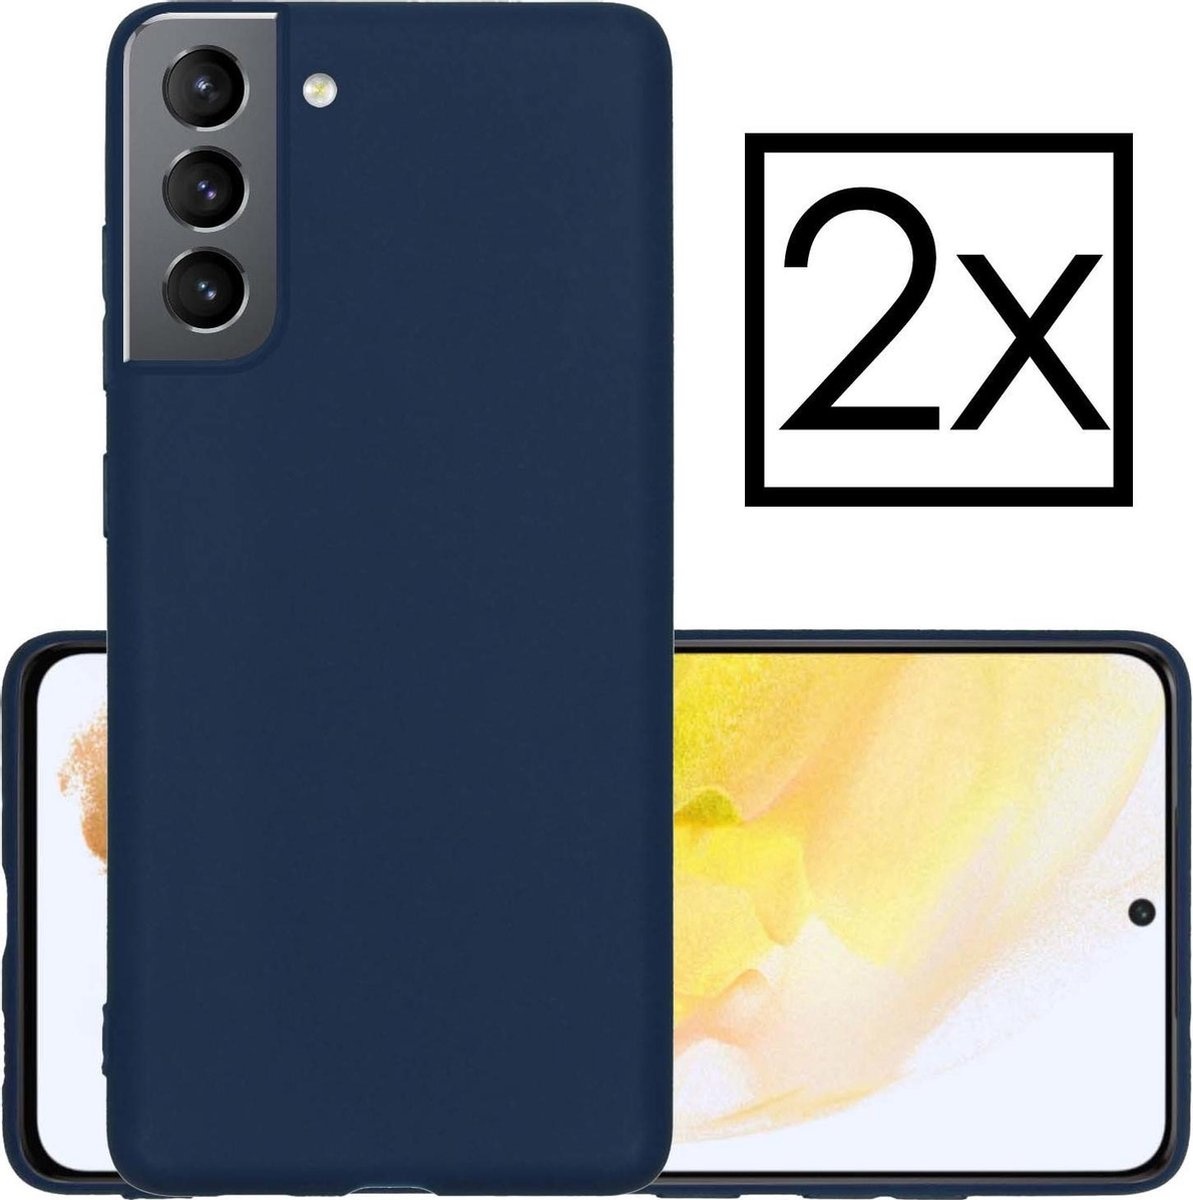 Hoes Geschikt voor Samsung S21 Hoesje Cover Siliconen Back Case Hoes - Donkerblauw - 2x